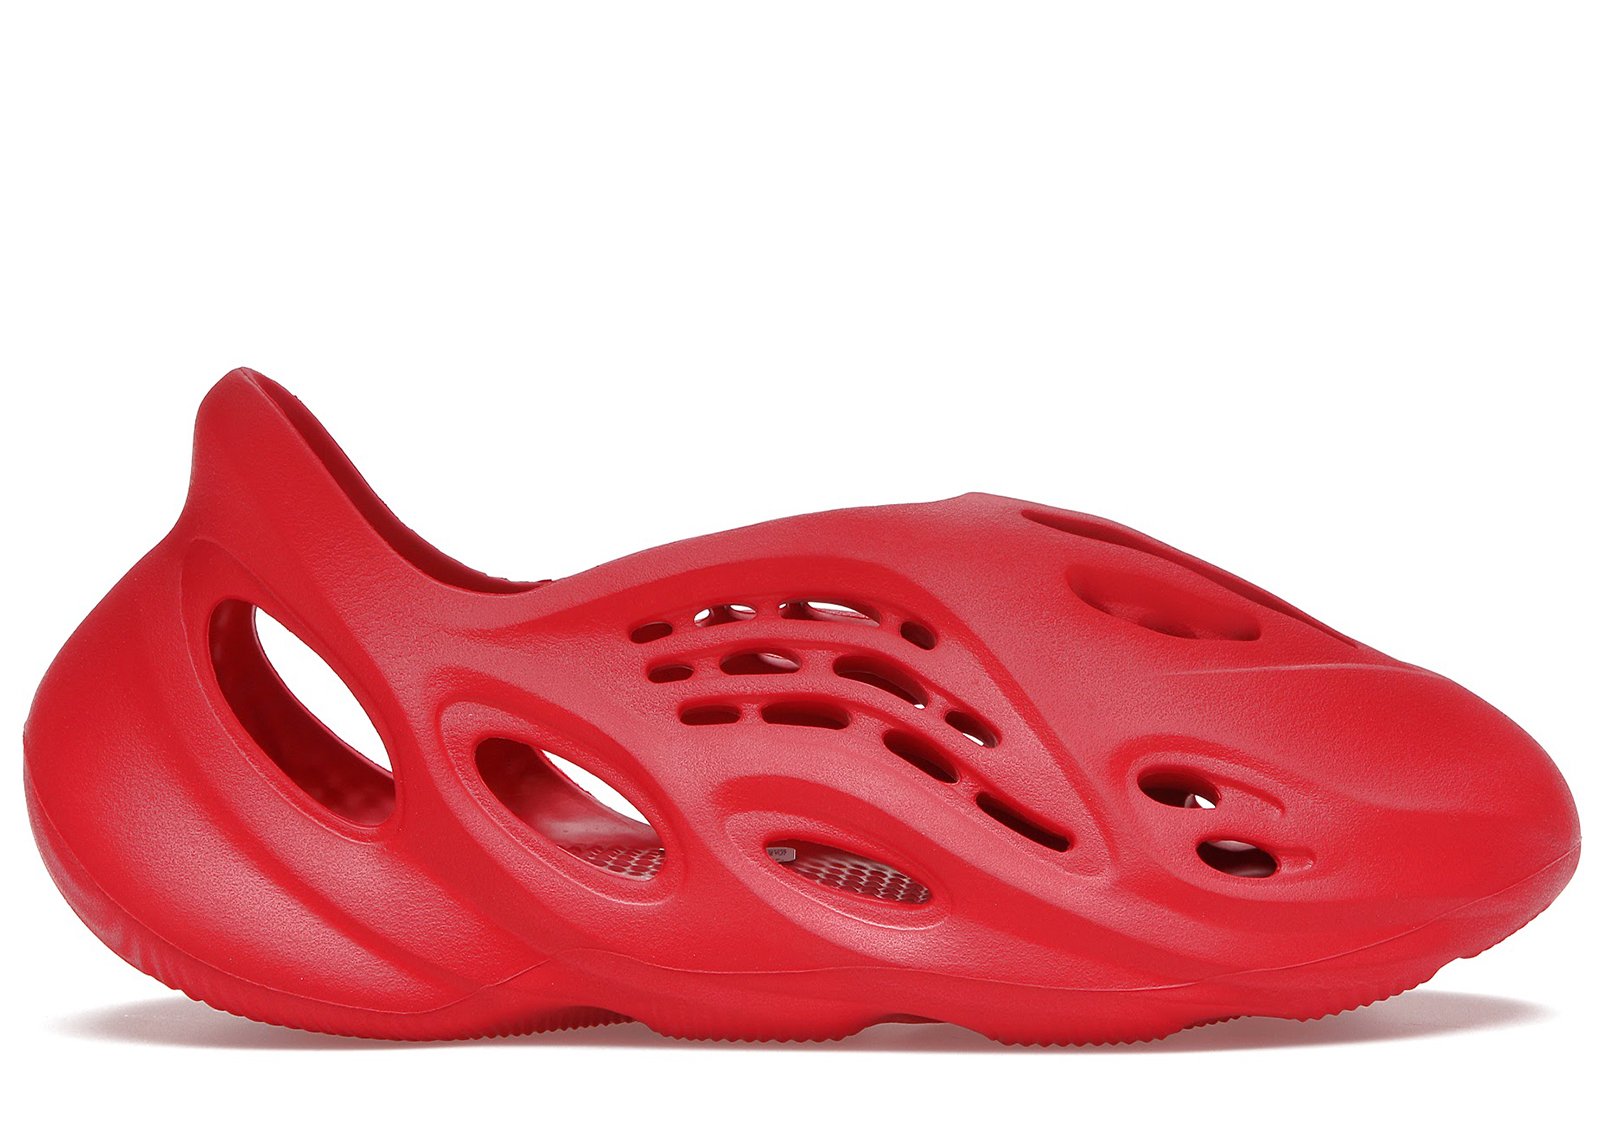 Yeezy Foam Runner Vermillion sneakers